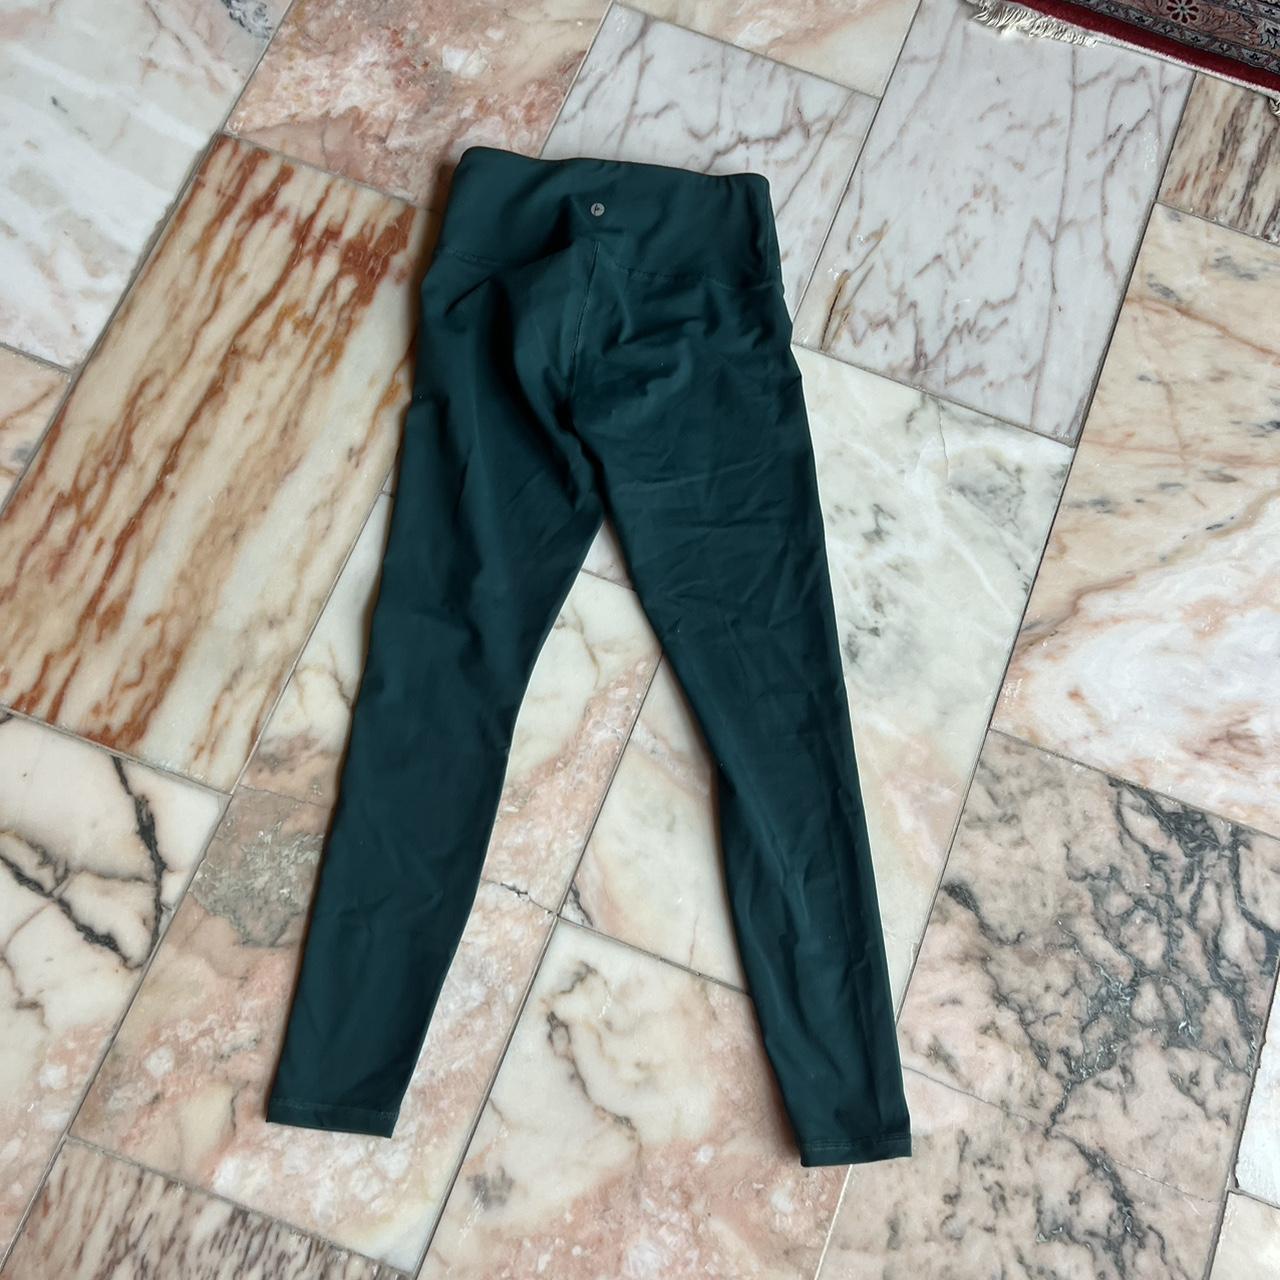 evergreen 90° leggings size small. like new #green - Depop